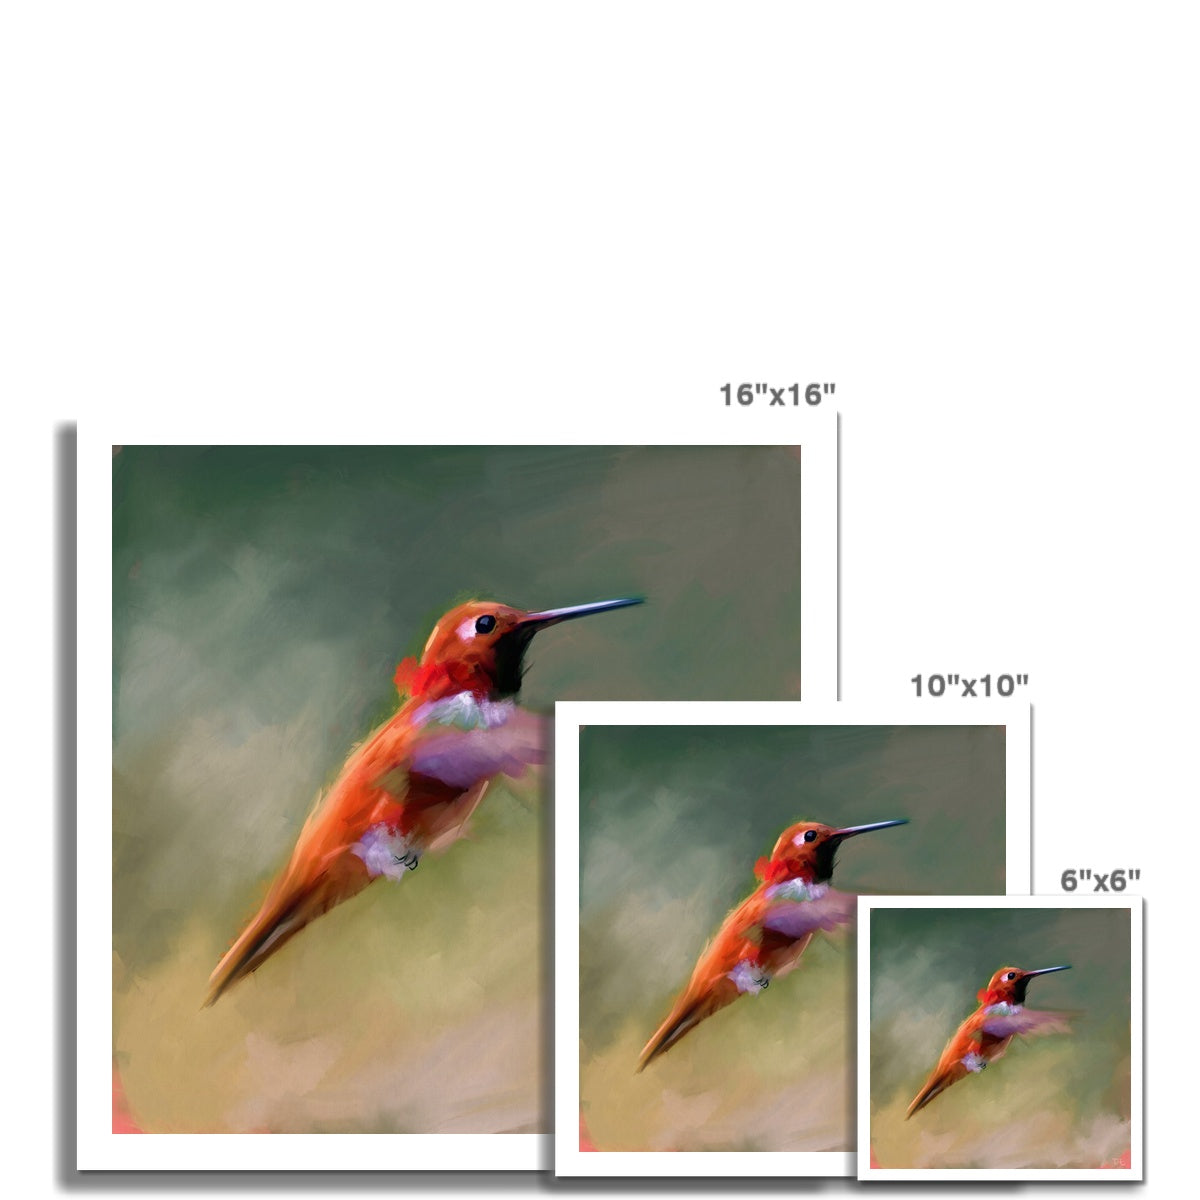 Hummingbird - Print